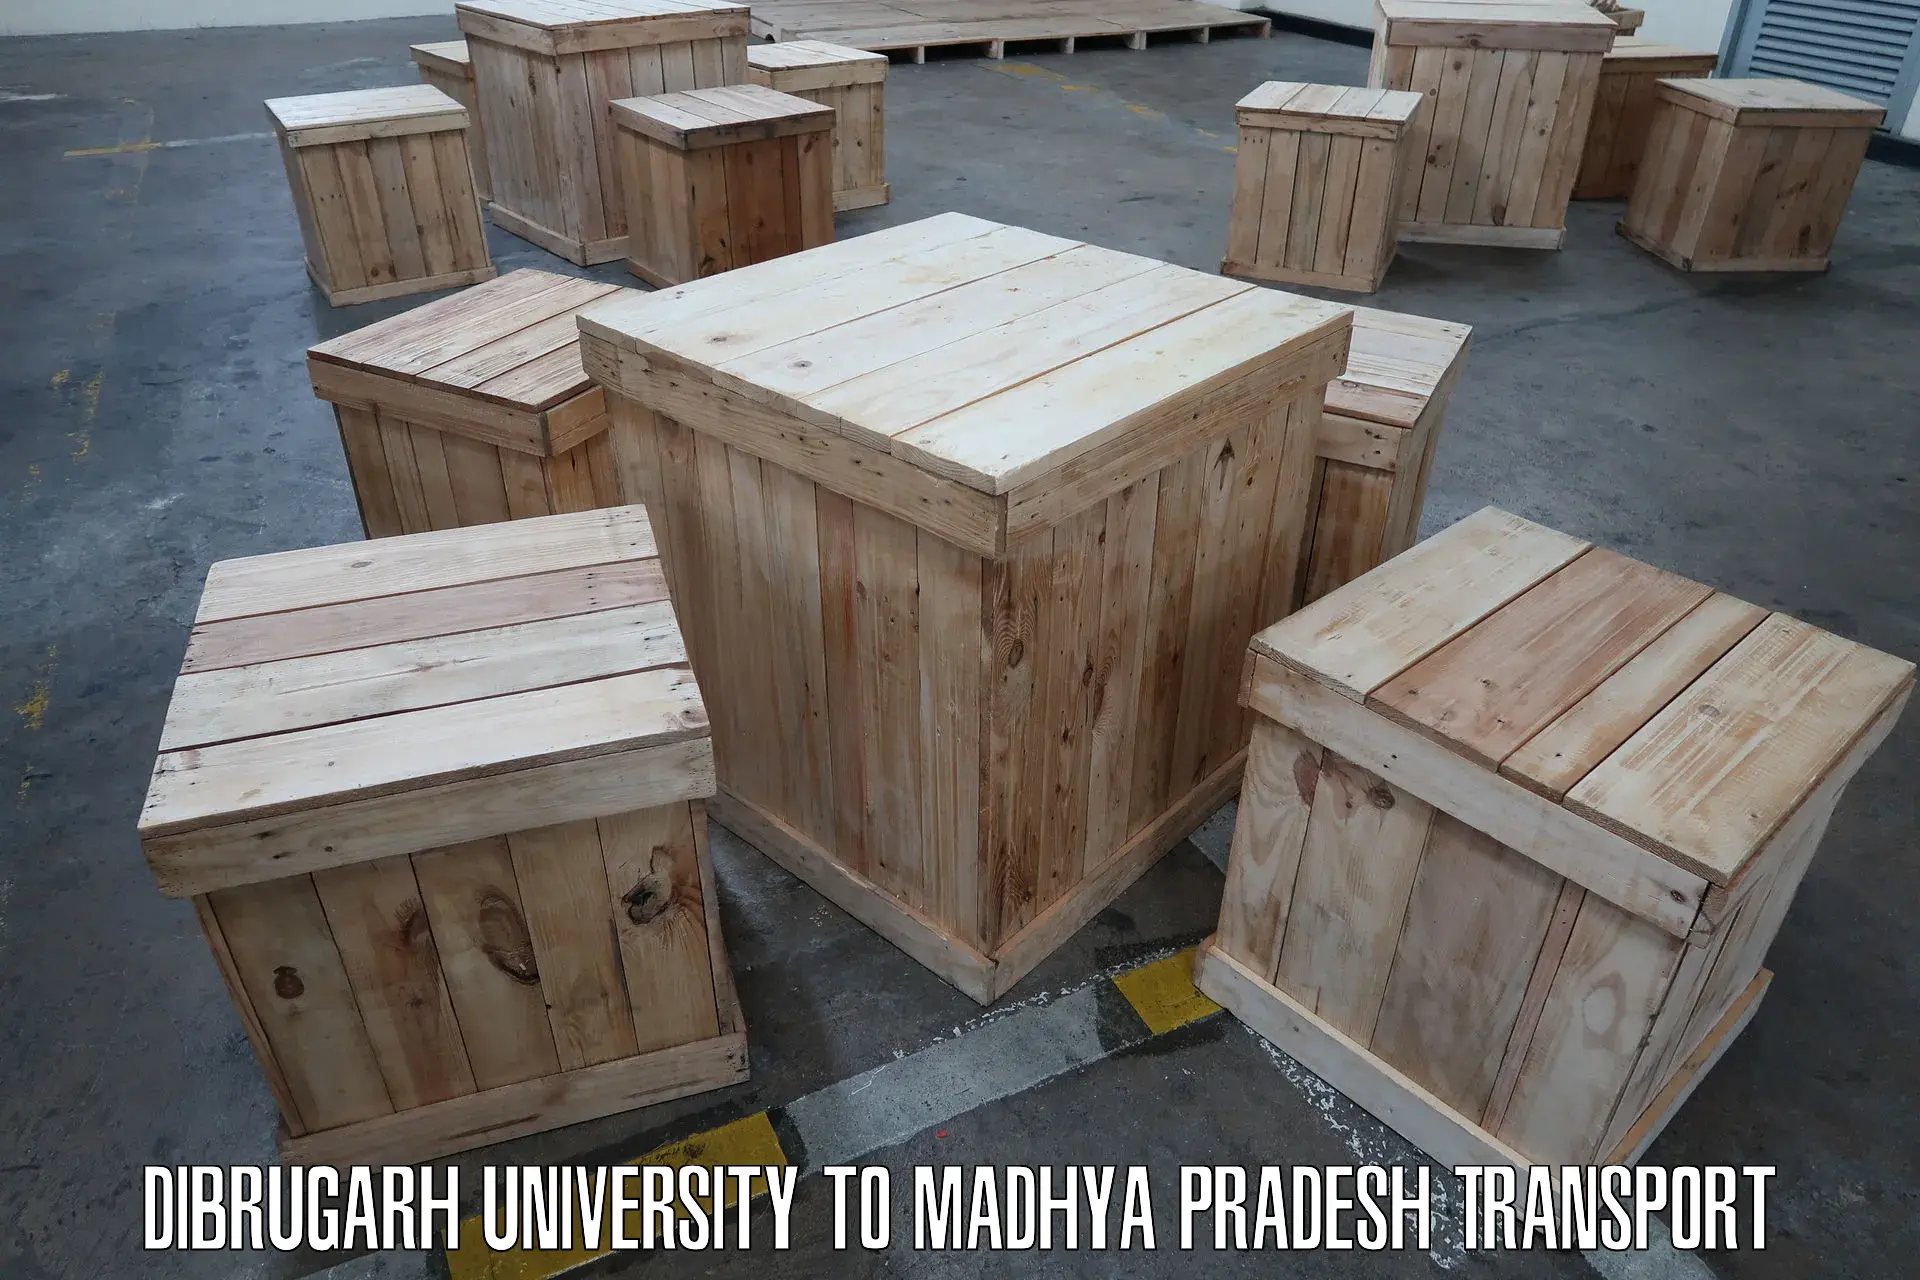 Truck transport companies in India Dibrugarh University to Gosalpur